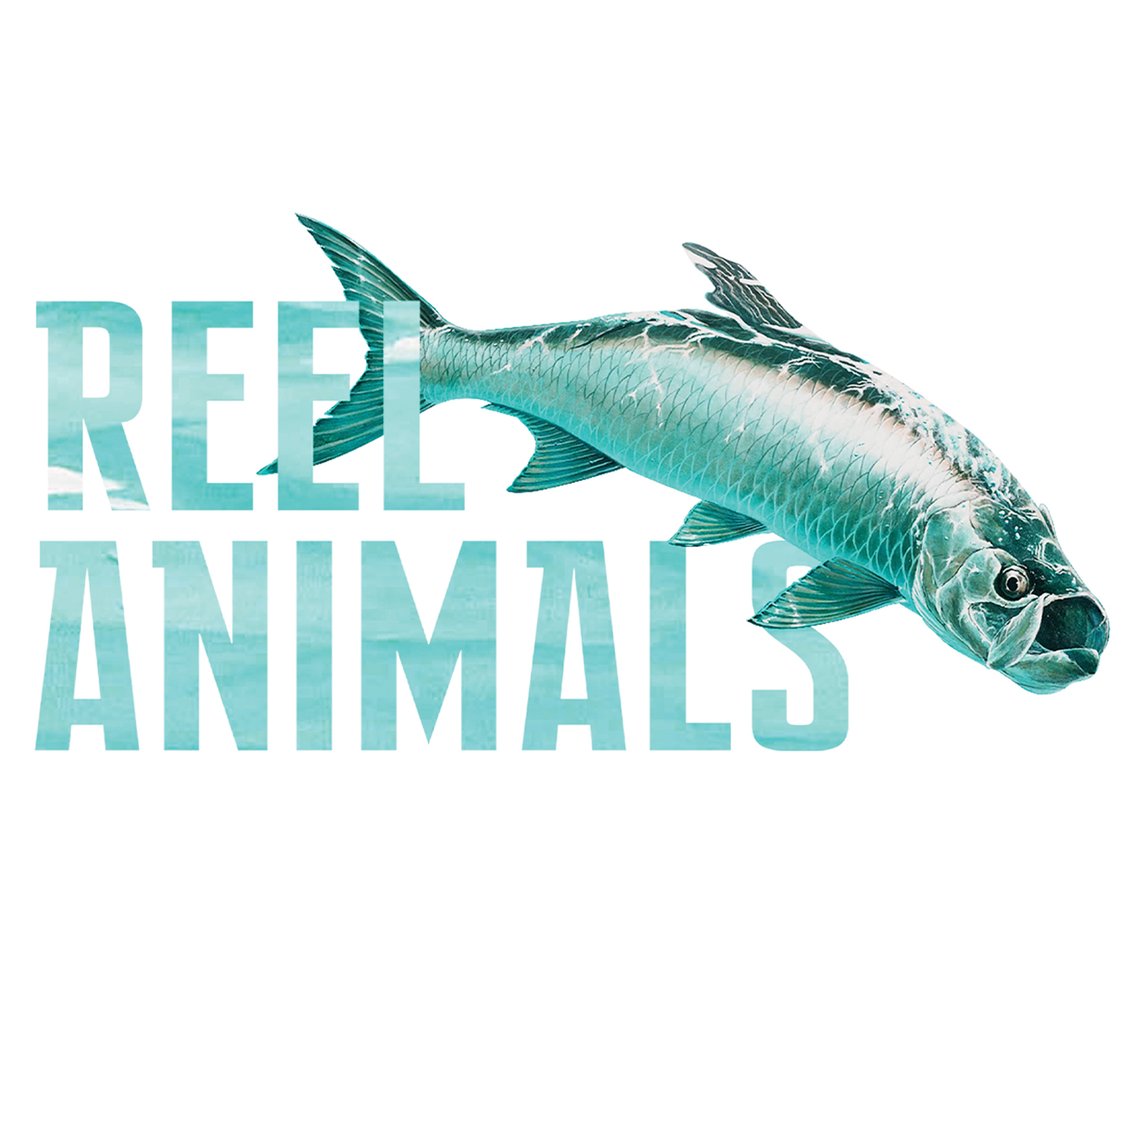 Reel Animals Saturday - Cover Image